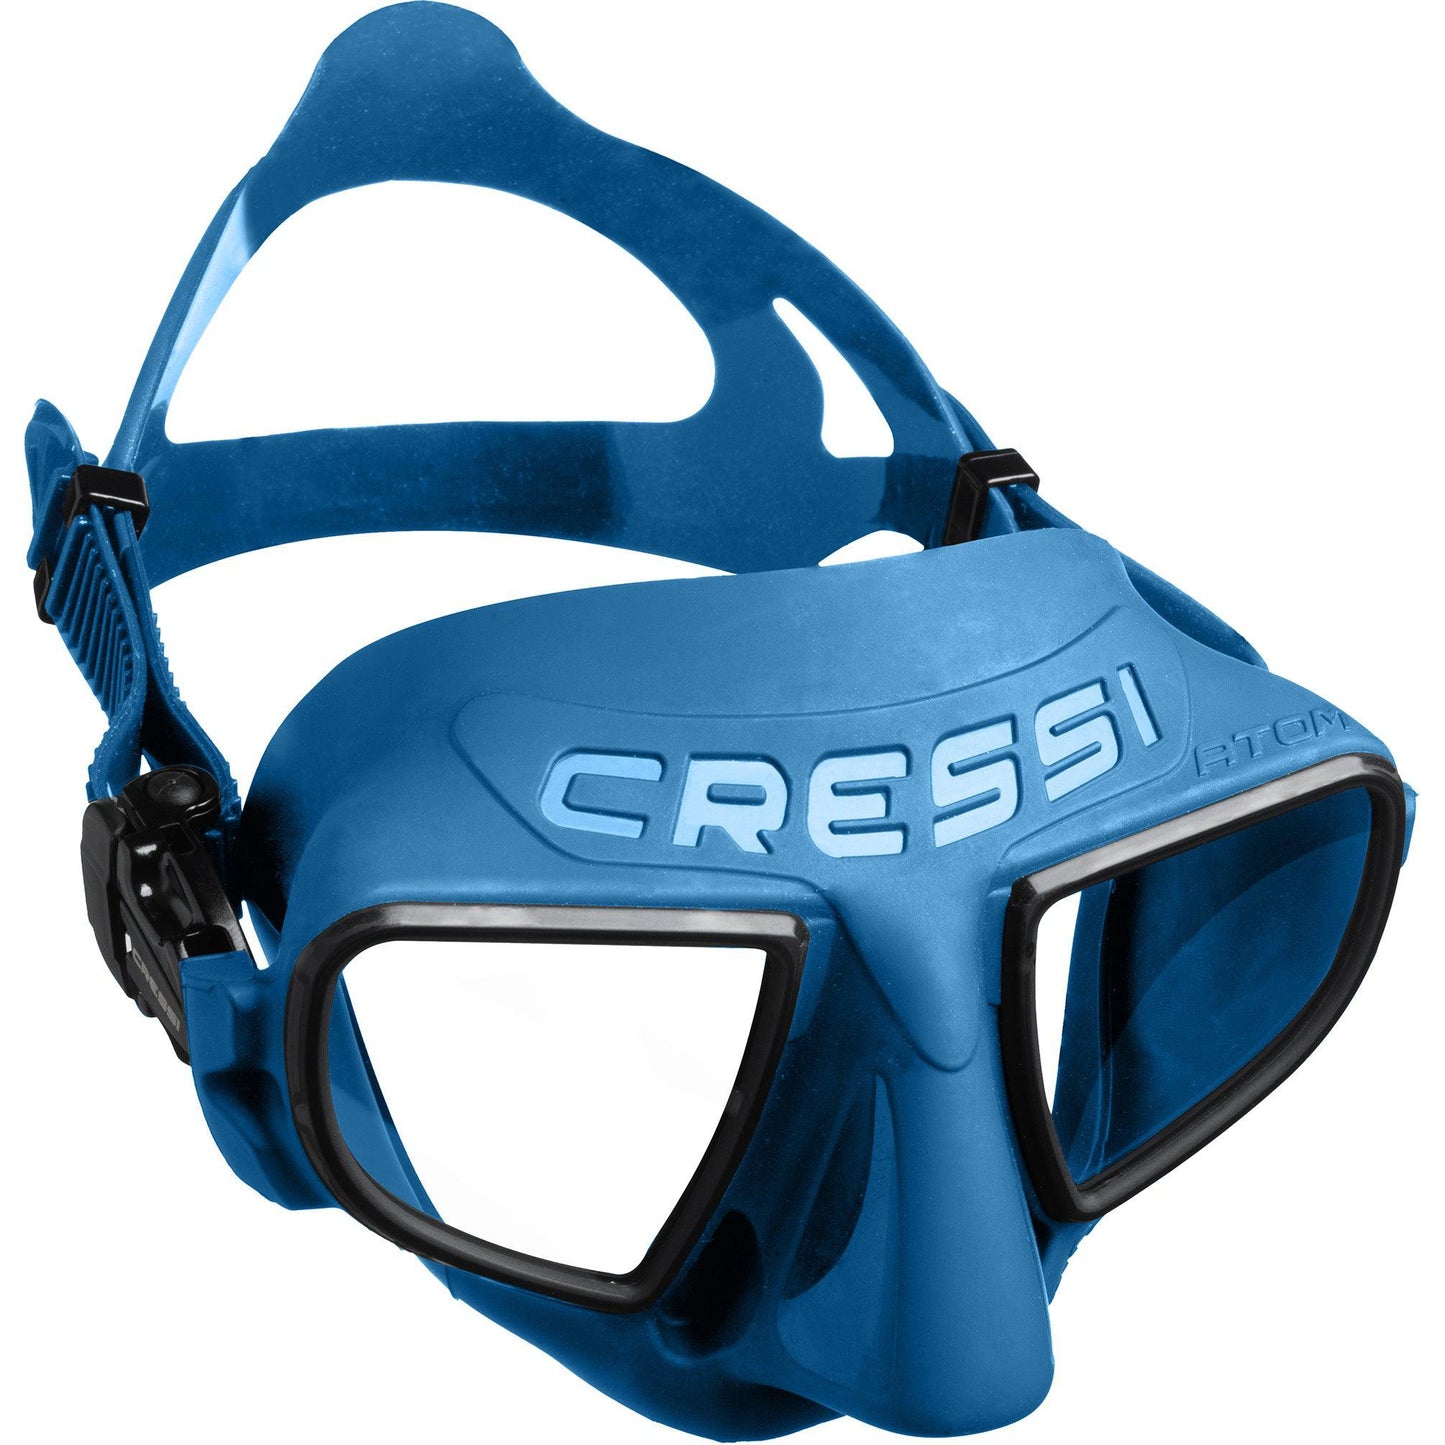 Cressi Atom Mask